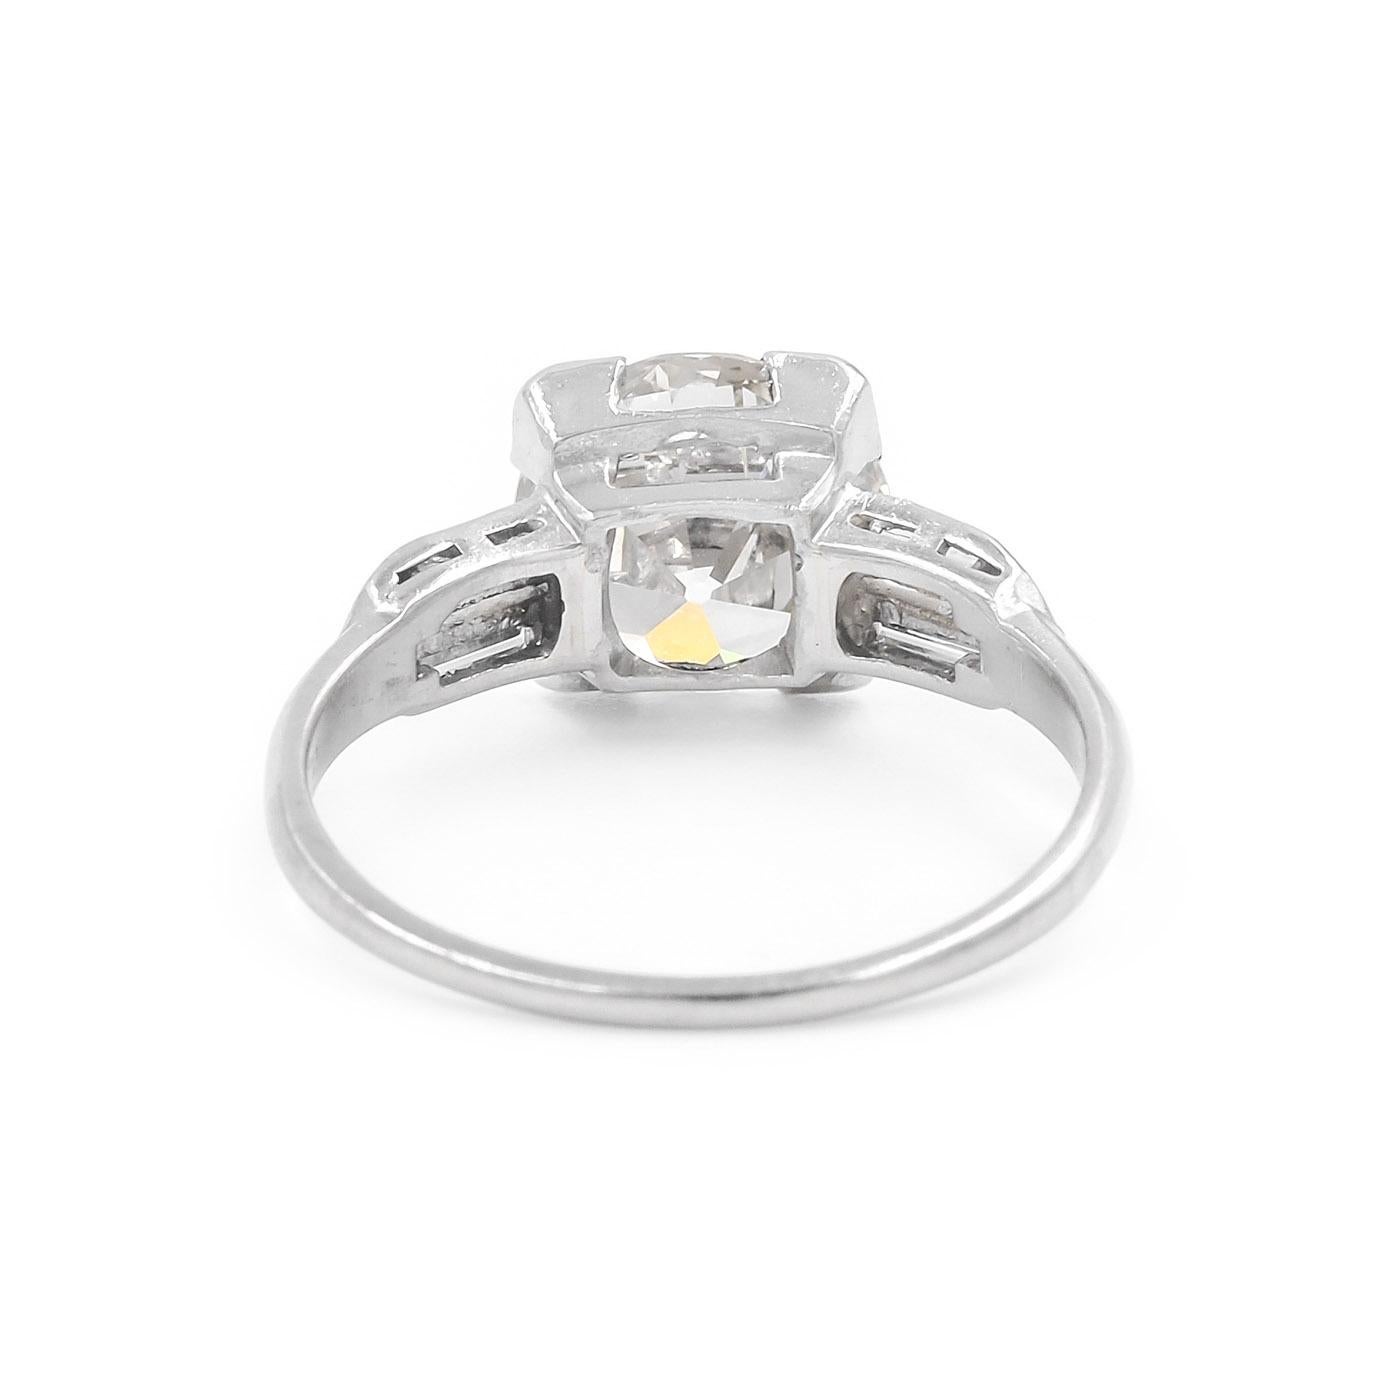 Round Cut Art Deco 2.00 Carat Transitional Cut Diamond GIA Certified Engagement Ring